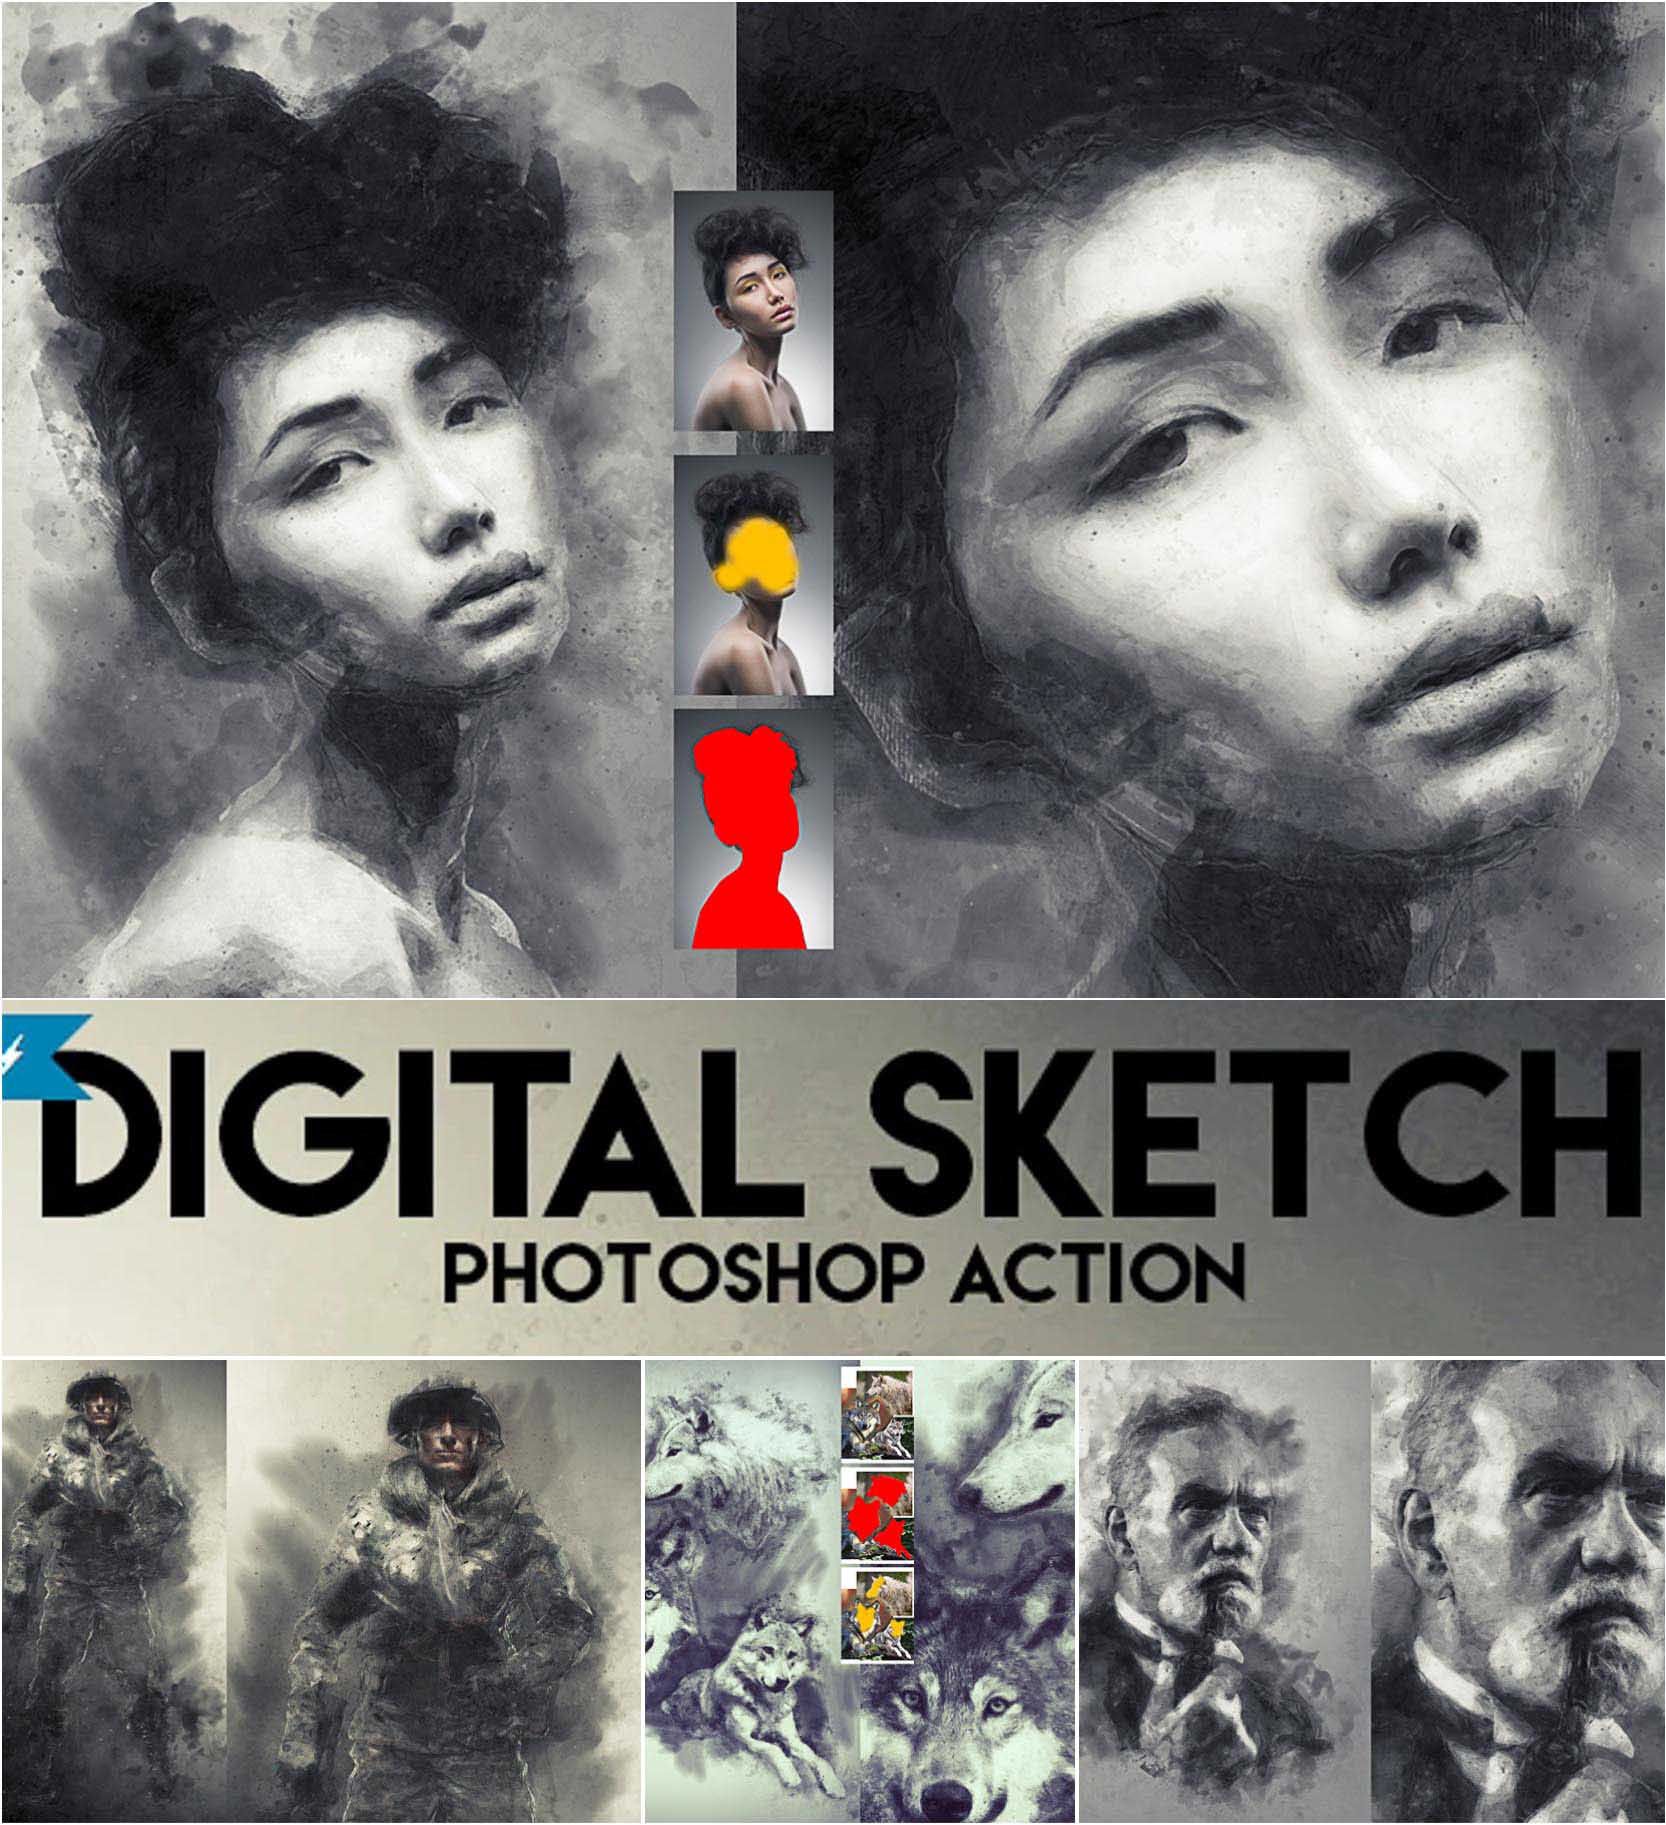 Digital Sketch Photoshop Action by AL AMIN on Dribbble